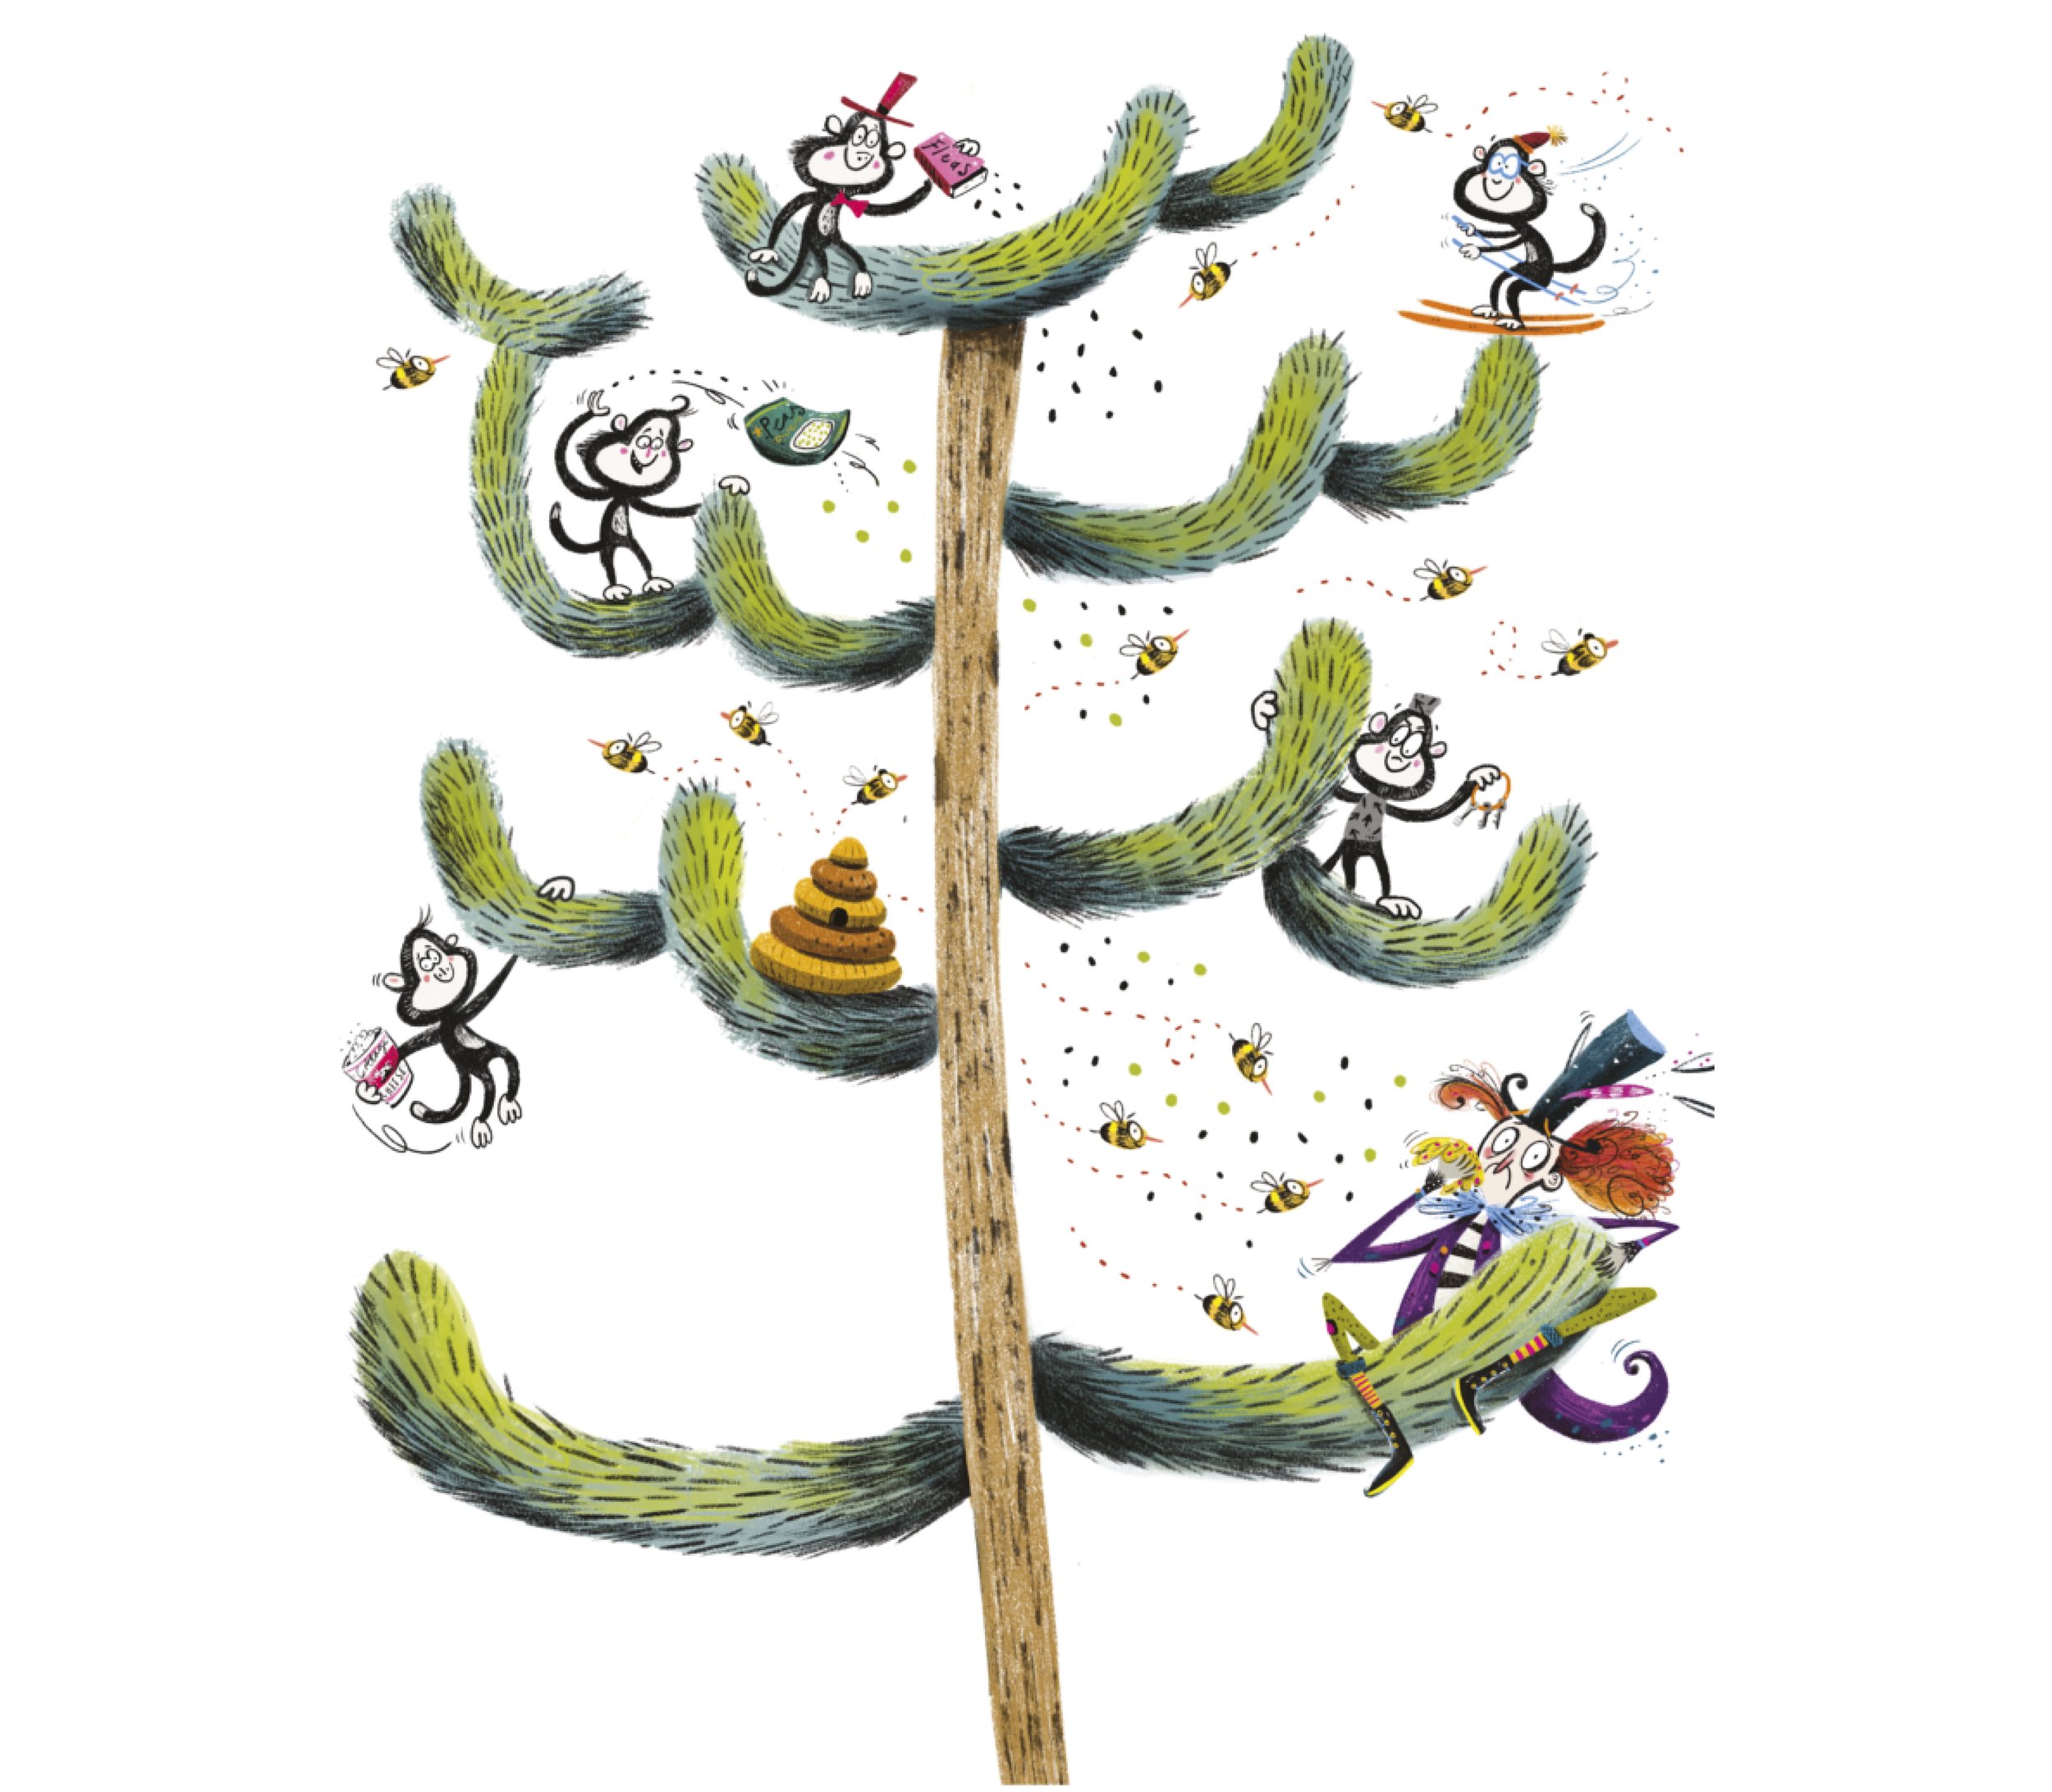 nathan-reed-monkey-tree-illustration.jpg